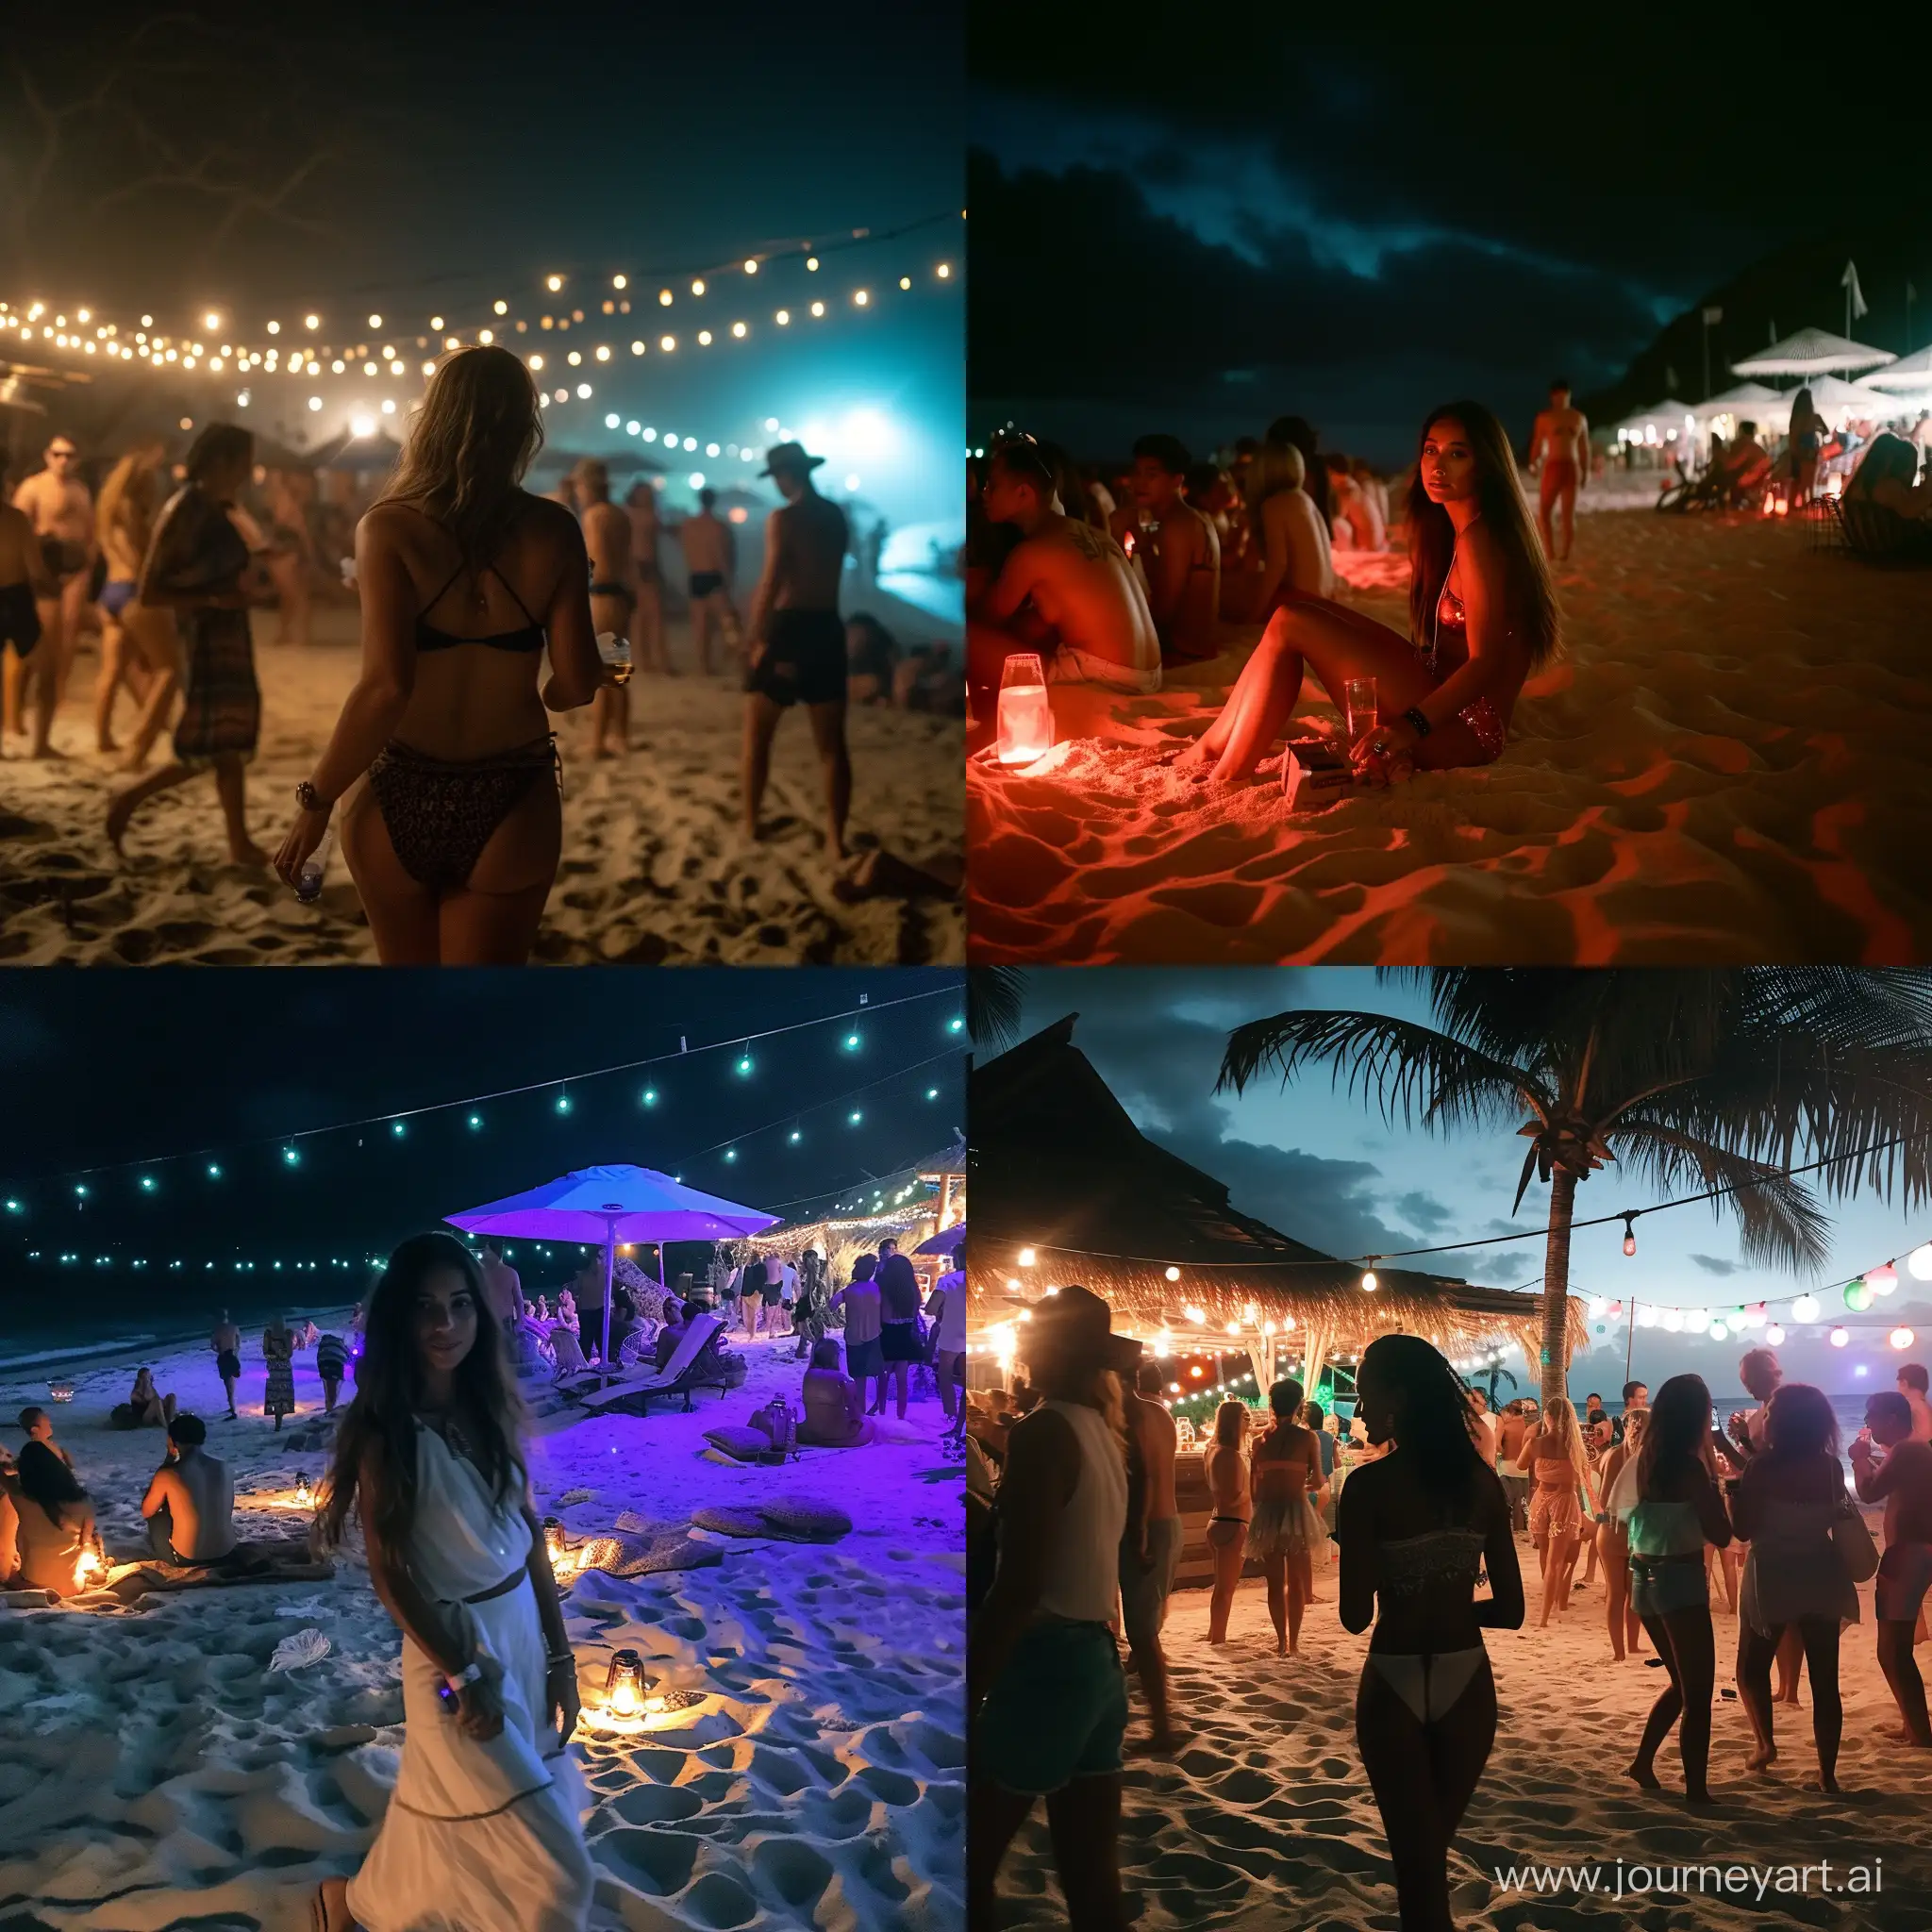 dami lee at the beach partying at night